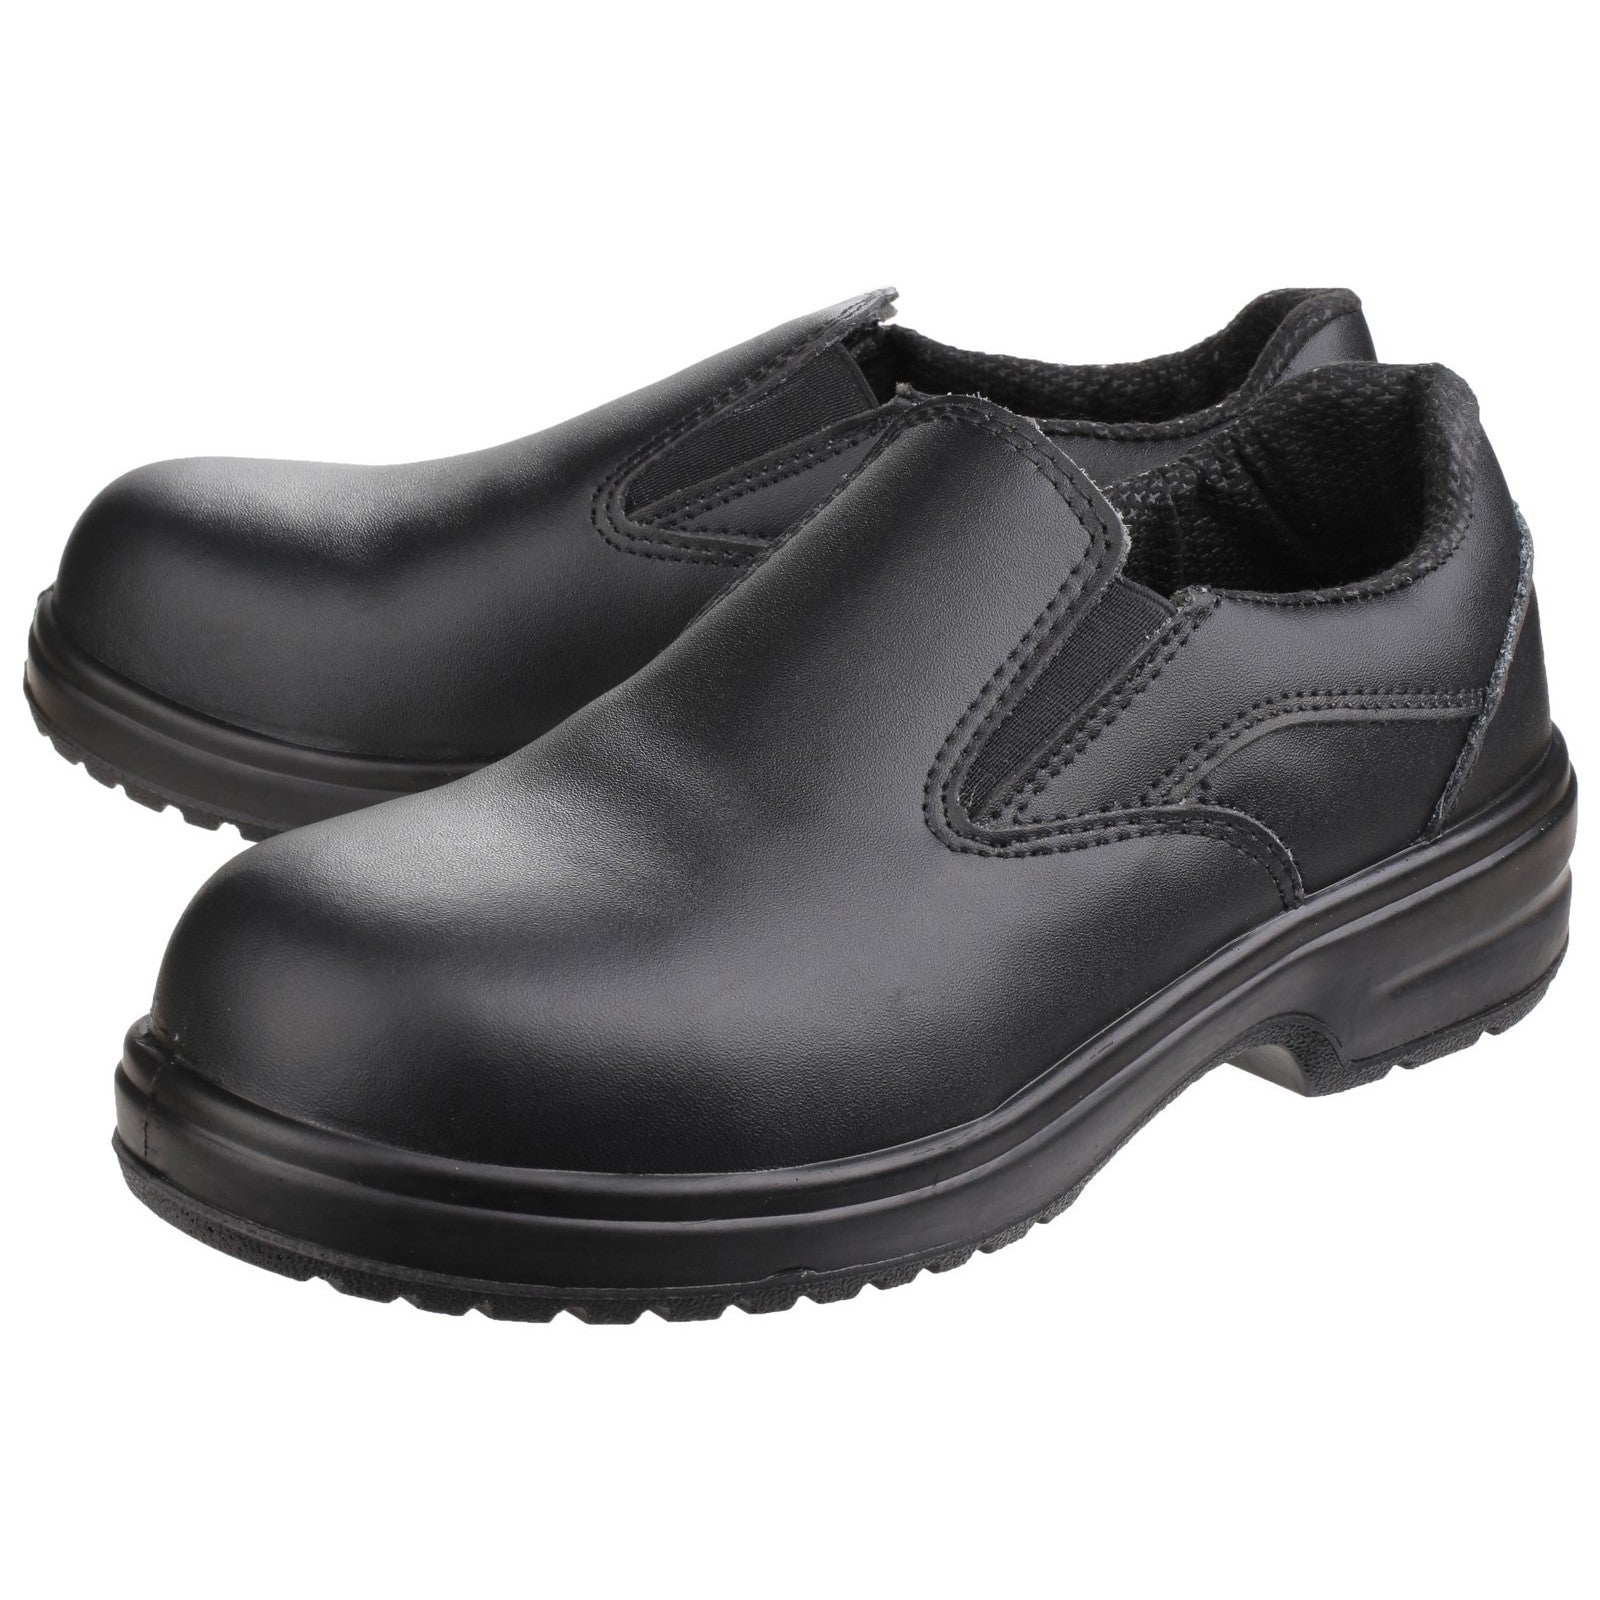 Amblers FS94C Lightweight Slip on Safety Shoe